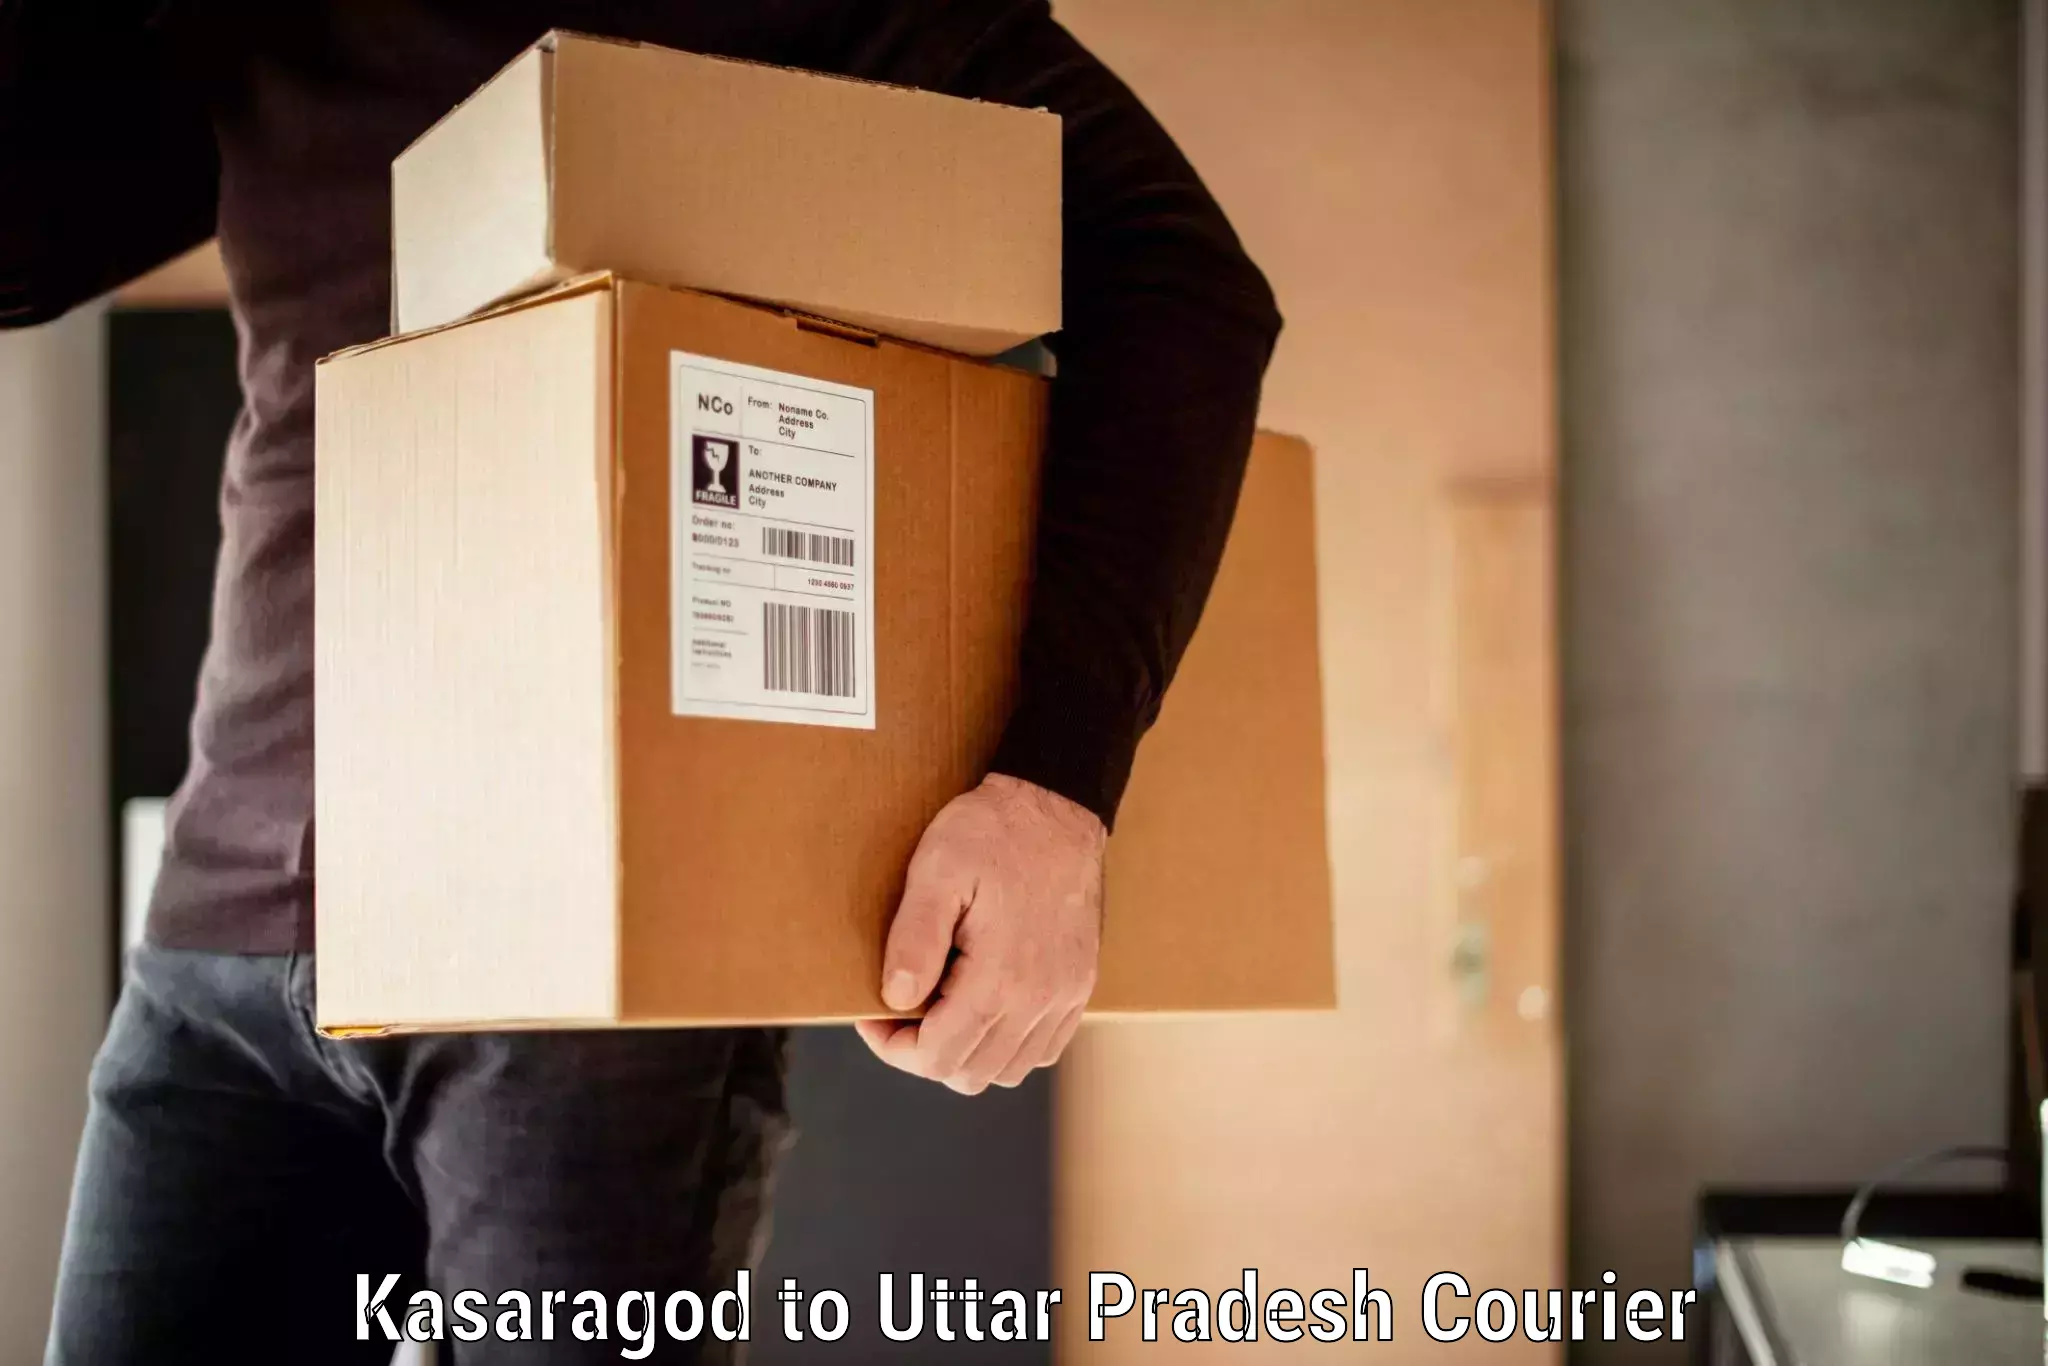 Same day luggage service Kasaragod to Varanasi